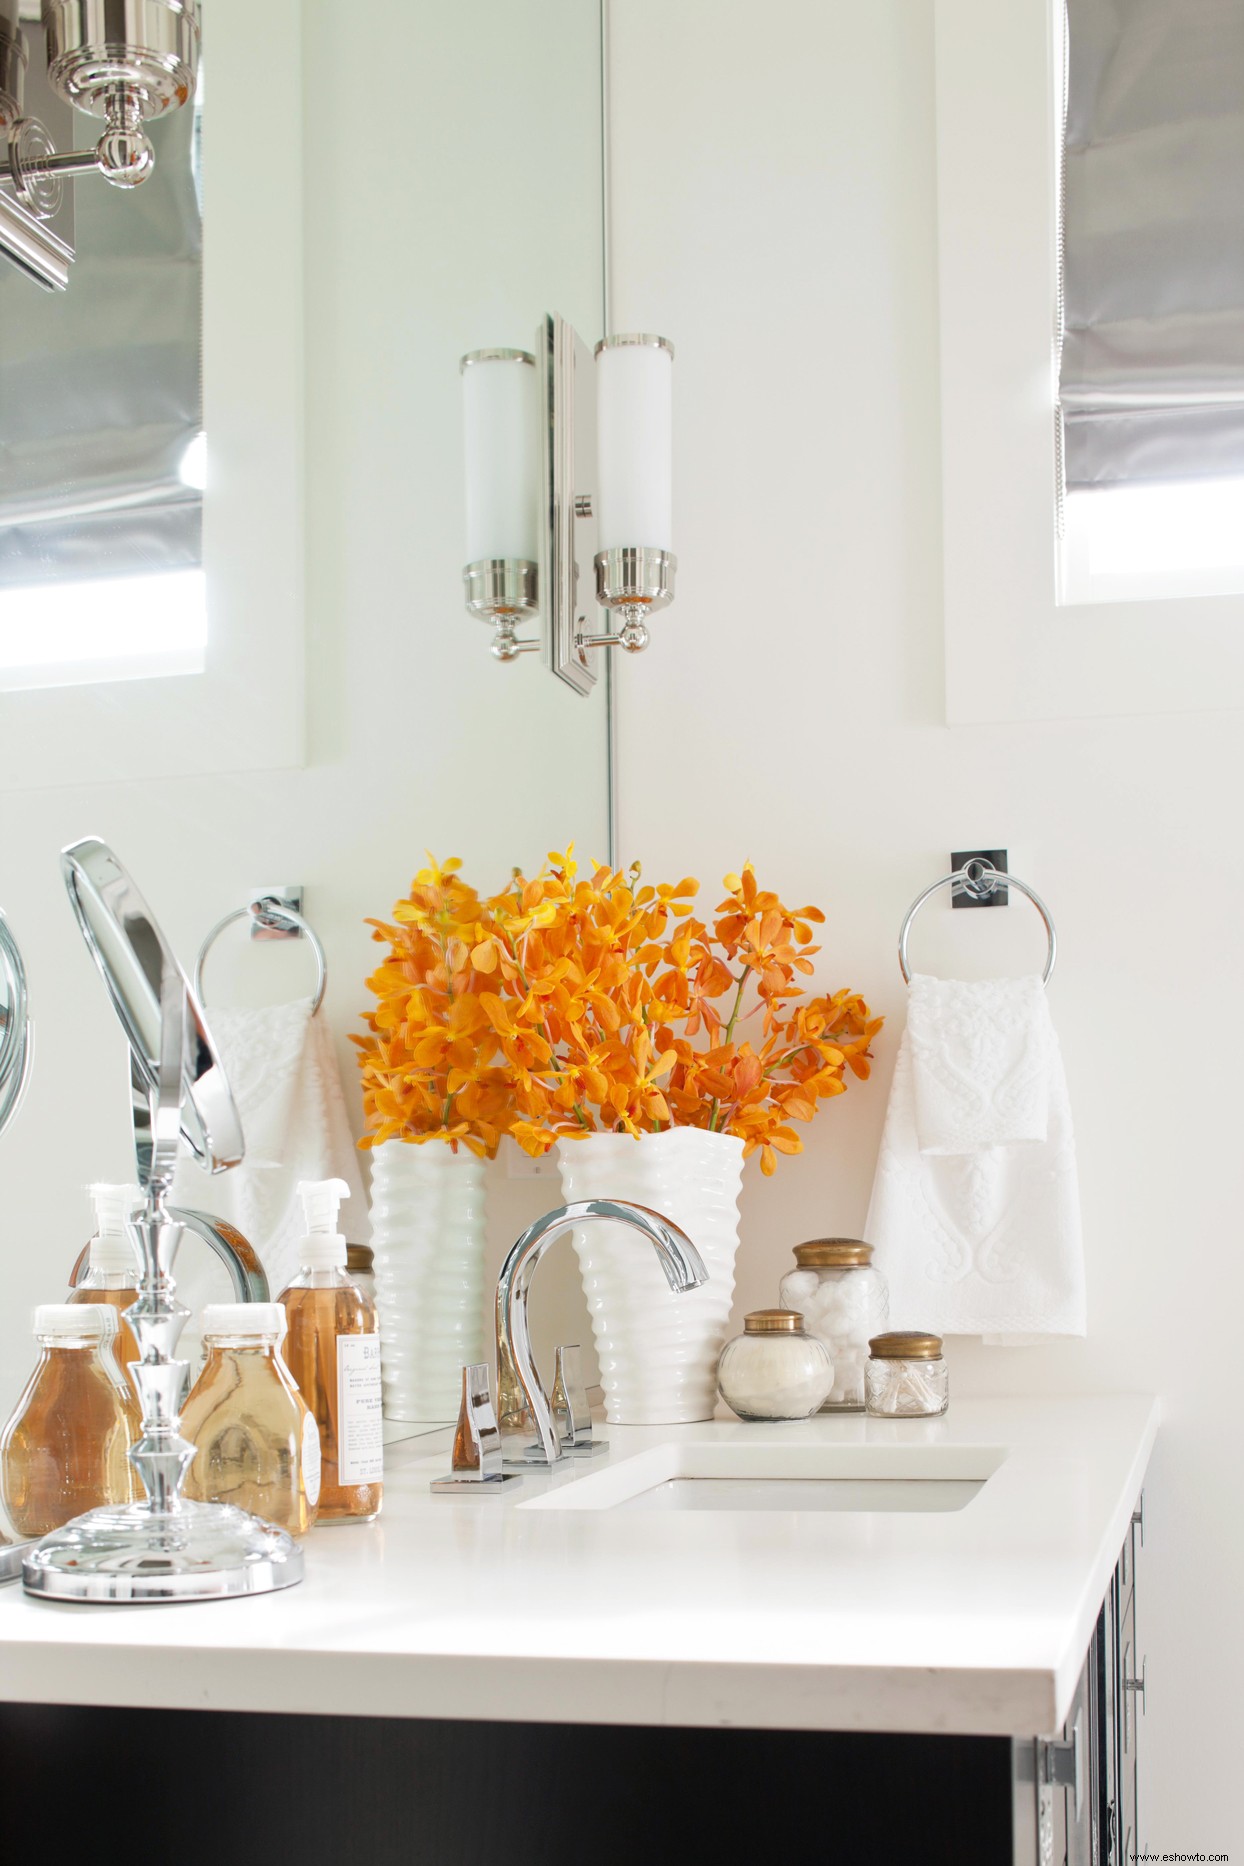 9 ideas de decoración de baño de otoño que no fallan 